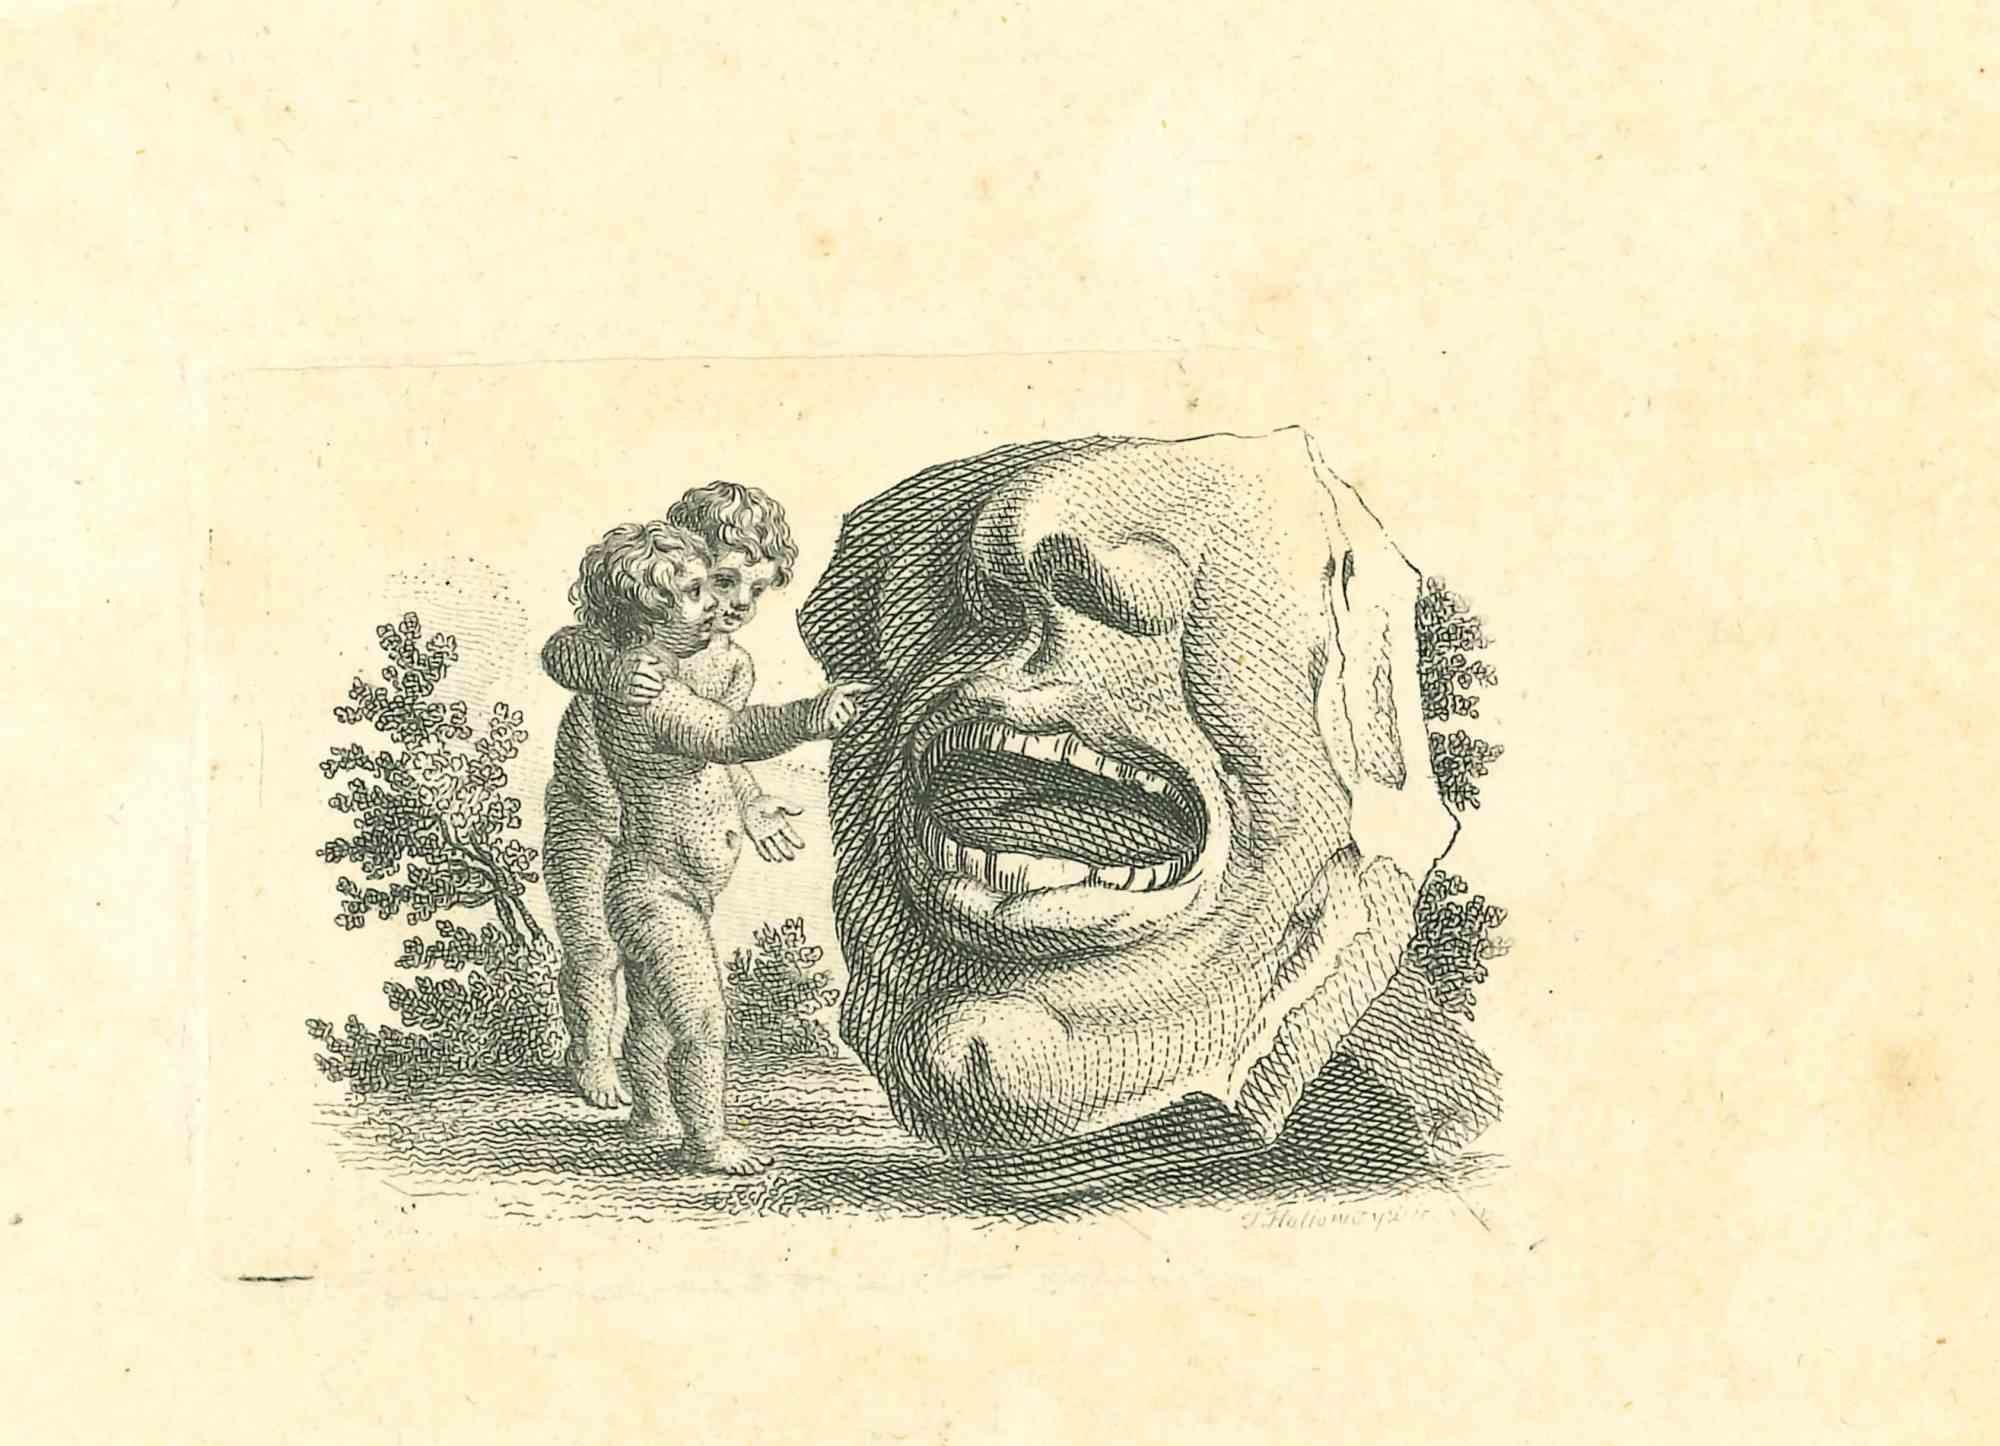 Die Physiognomie - The Stony Face and Babies ist eine Originalradierung von Thomas Holloway für Johann Caspar Lavaters "Essays on Physiognomy, Designed to Promote the Knowledge and the Love of Mankind", London, Bensley, 1810. 

Gute